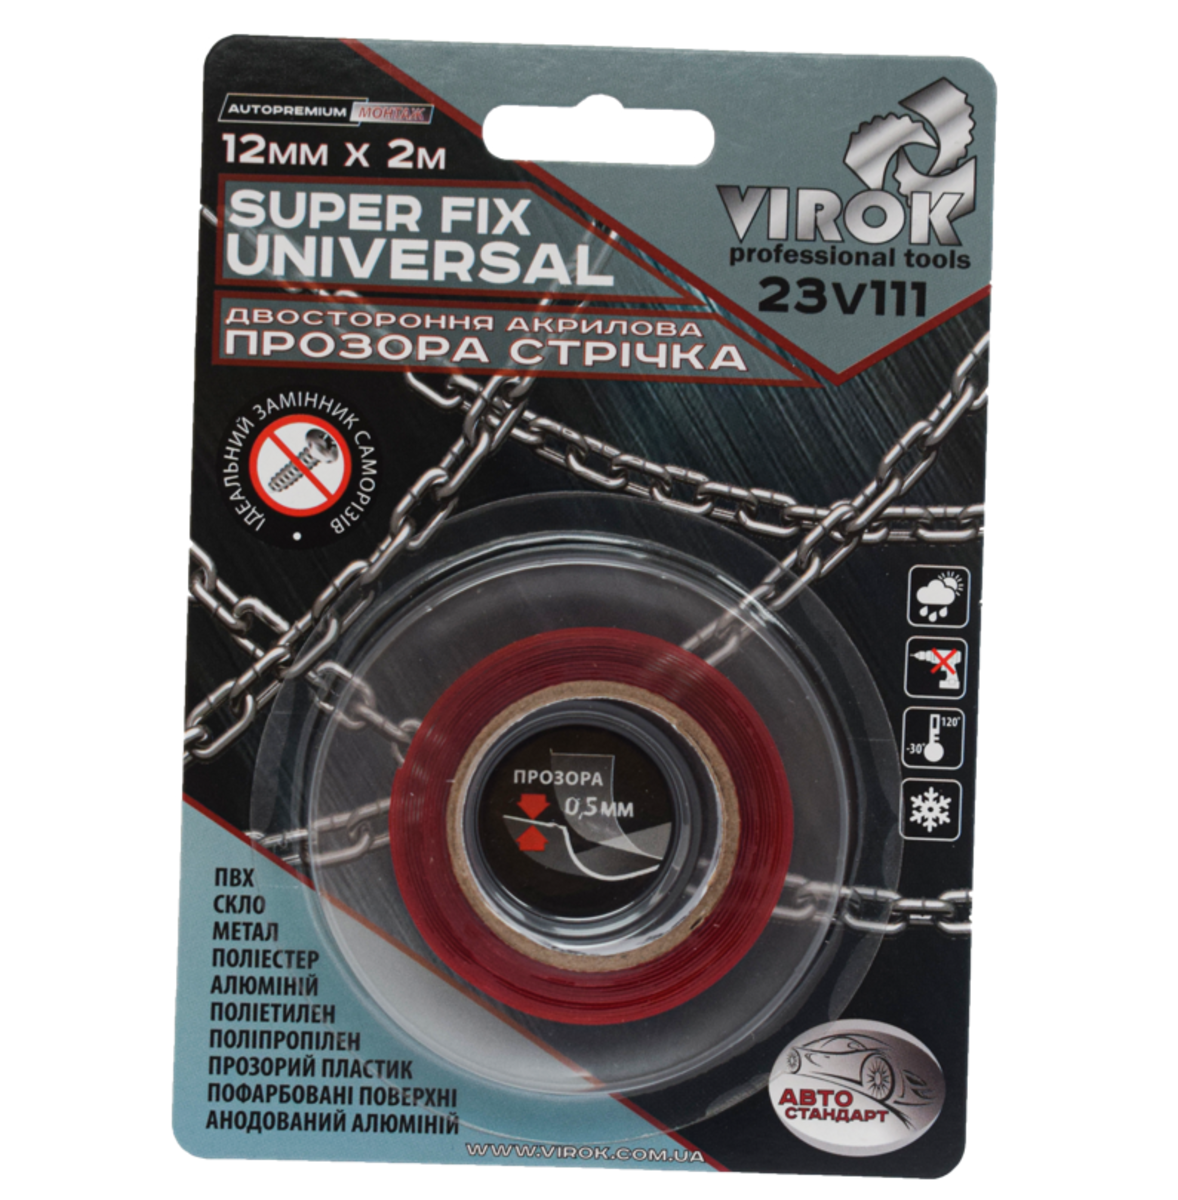 VIROK Стрічка 2-стороння акрилова Super Fix Universal: 12 мм х 2 м  | 23V111